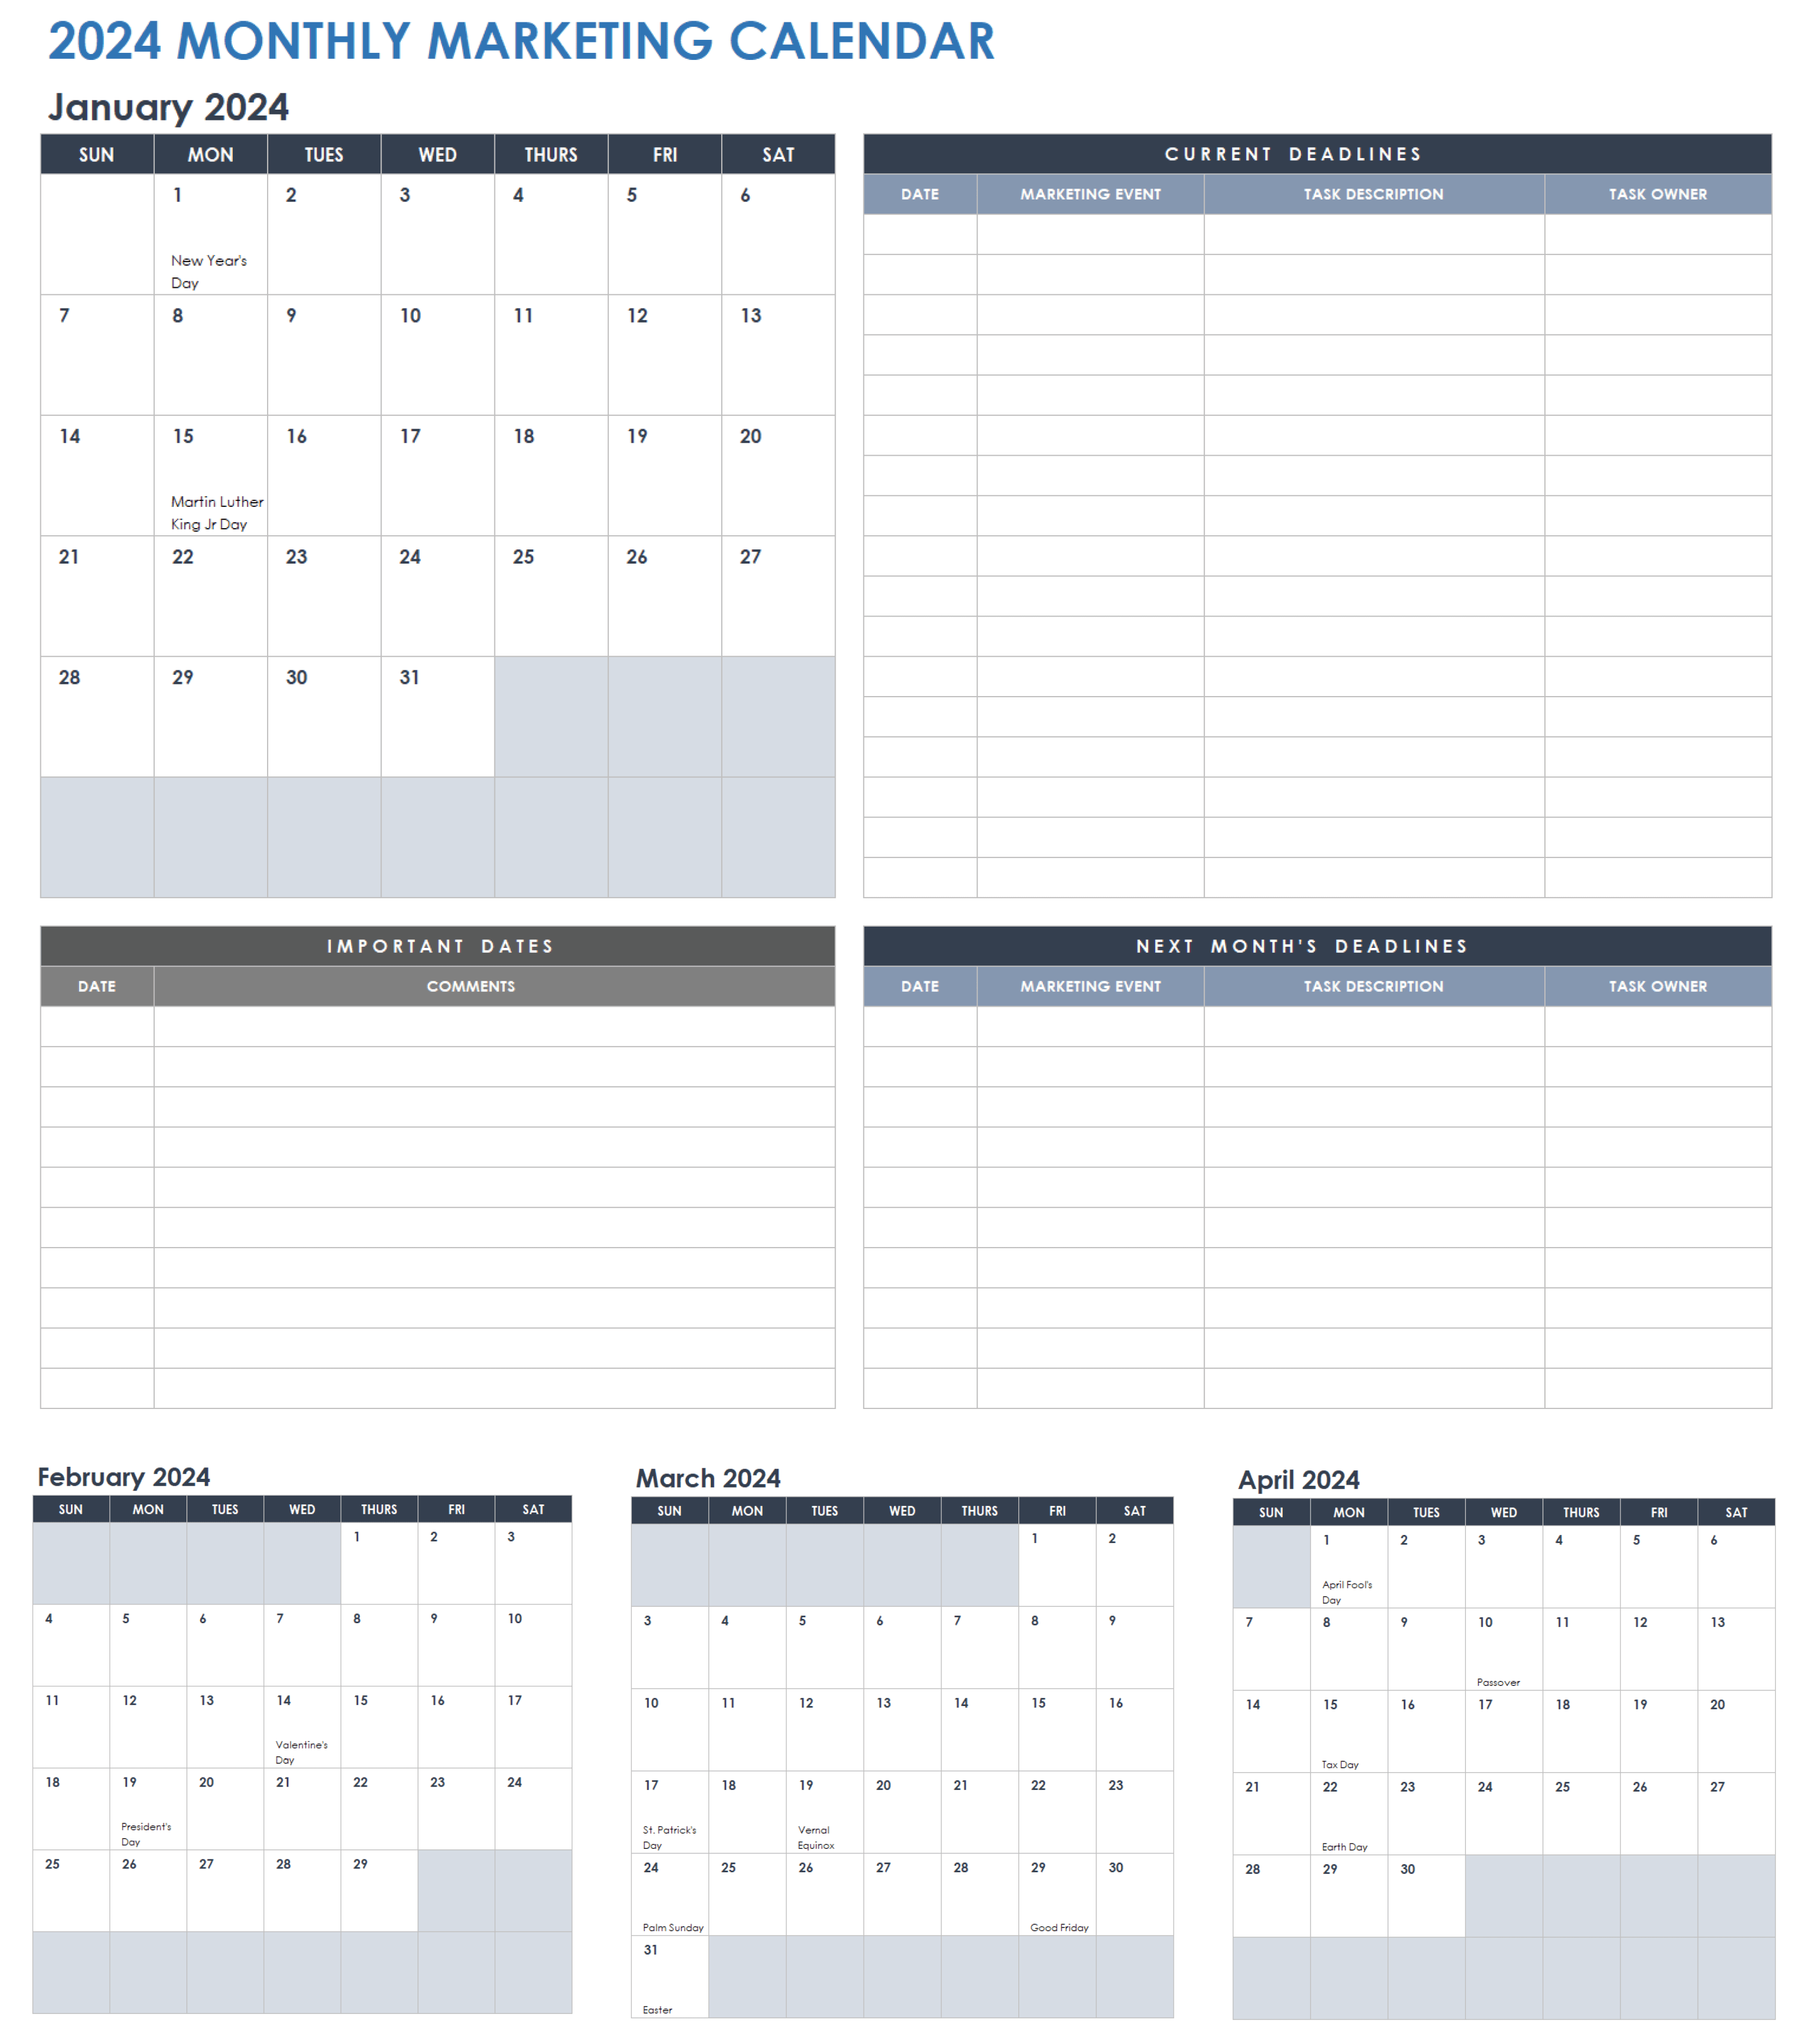 2024 Monthly Marketing Calendar Template